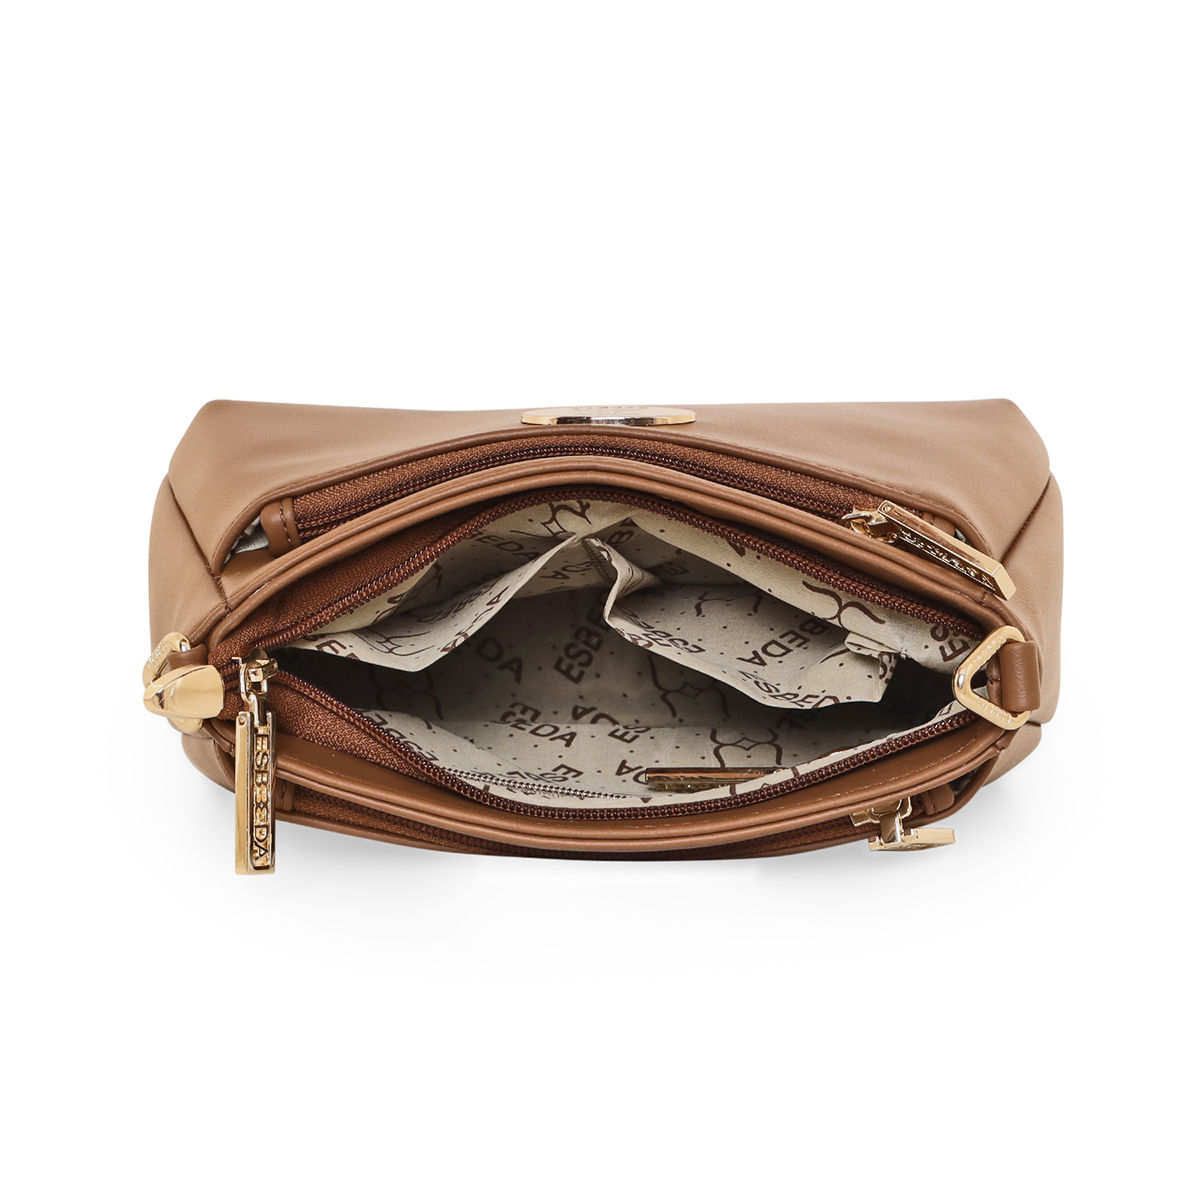 Handbags | Branded Esbeda Purse. | Freeup